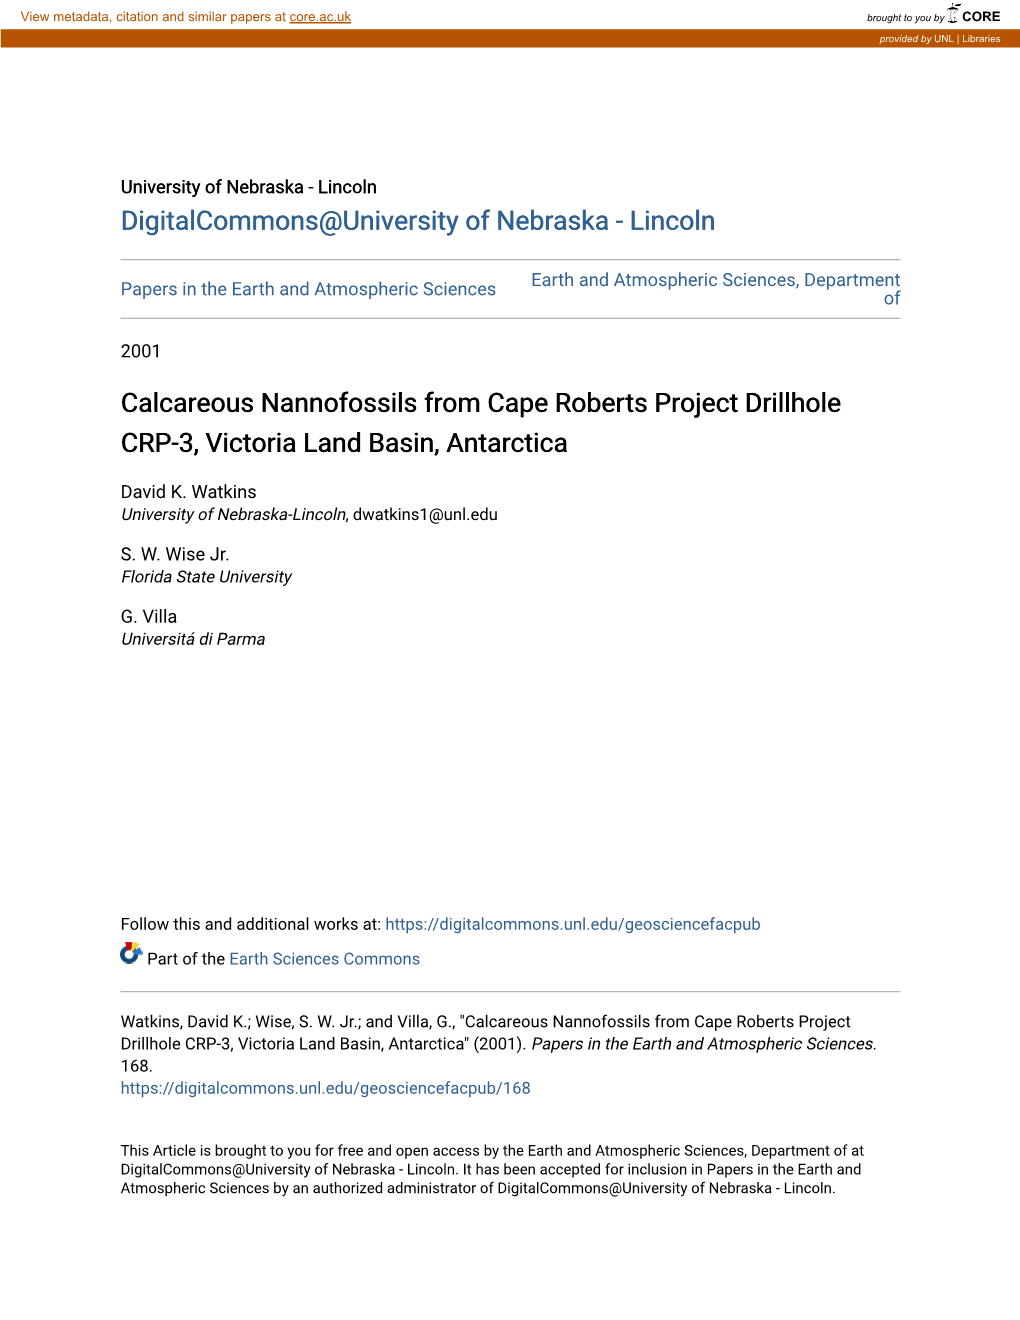 Calcareous Nannofossils from Cape Roberts Project Drillhole CRP-3, Victoria Land Basin, Antarctica